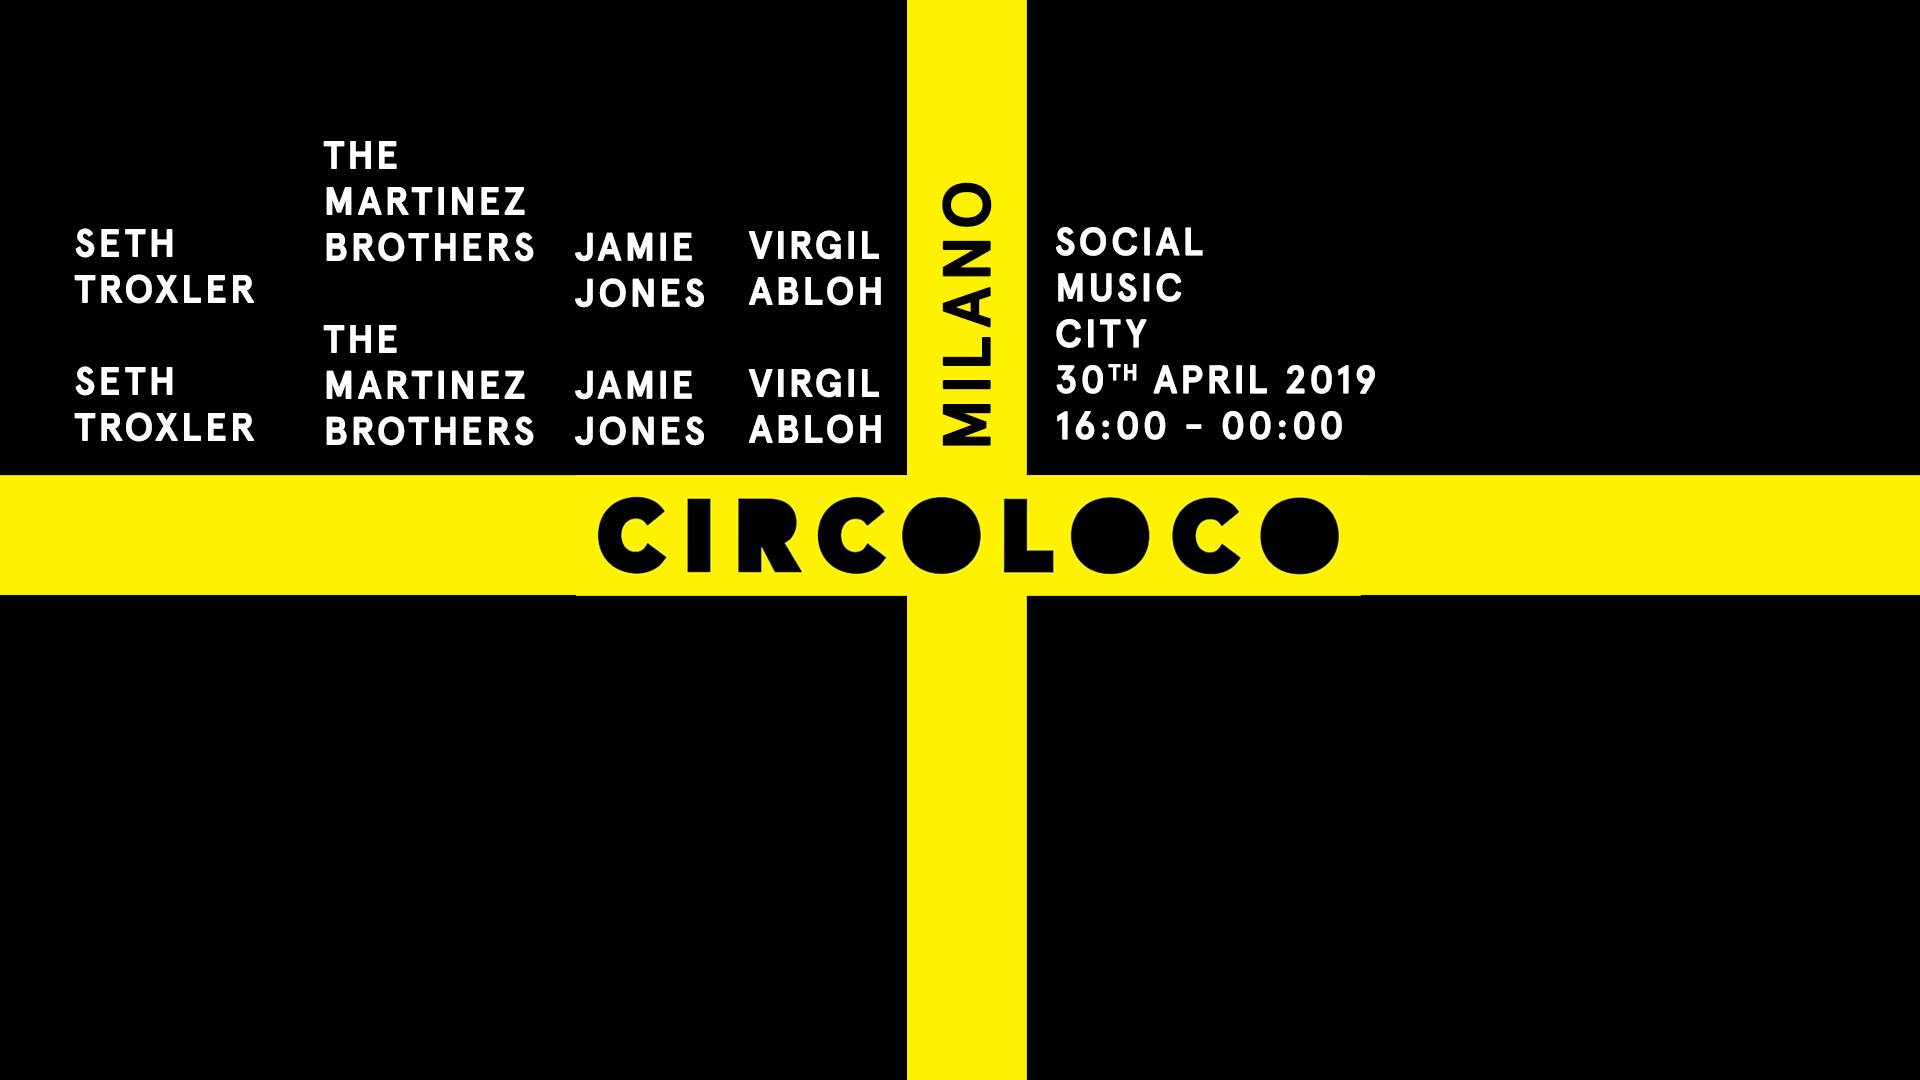 Social Music City 2019 - Lineup